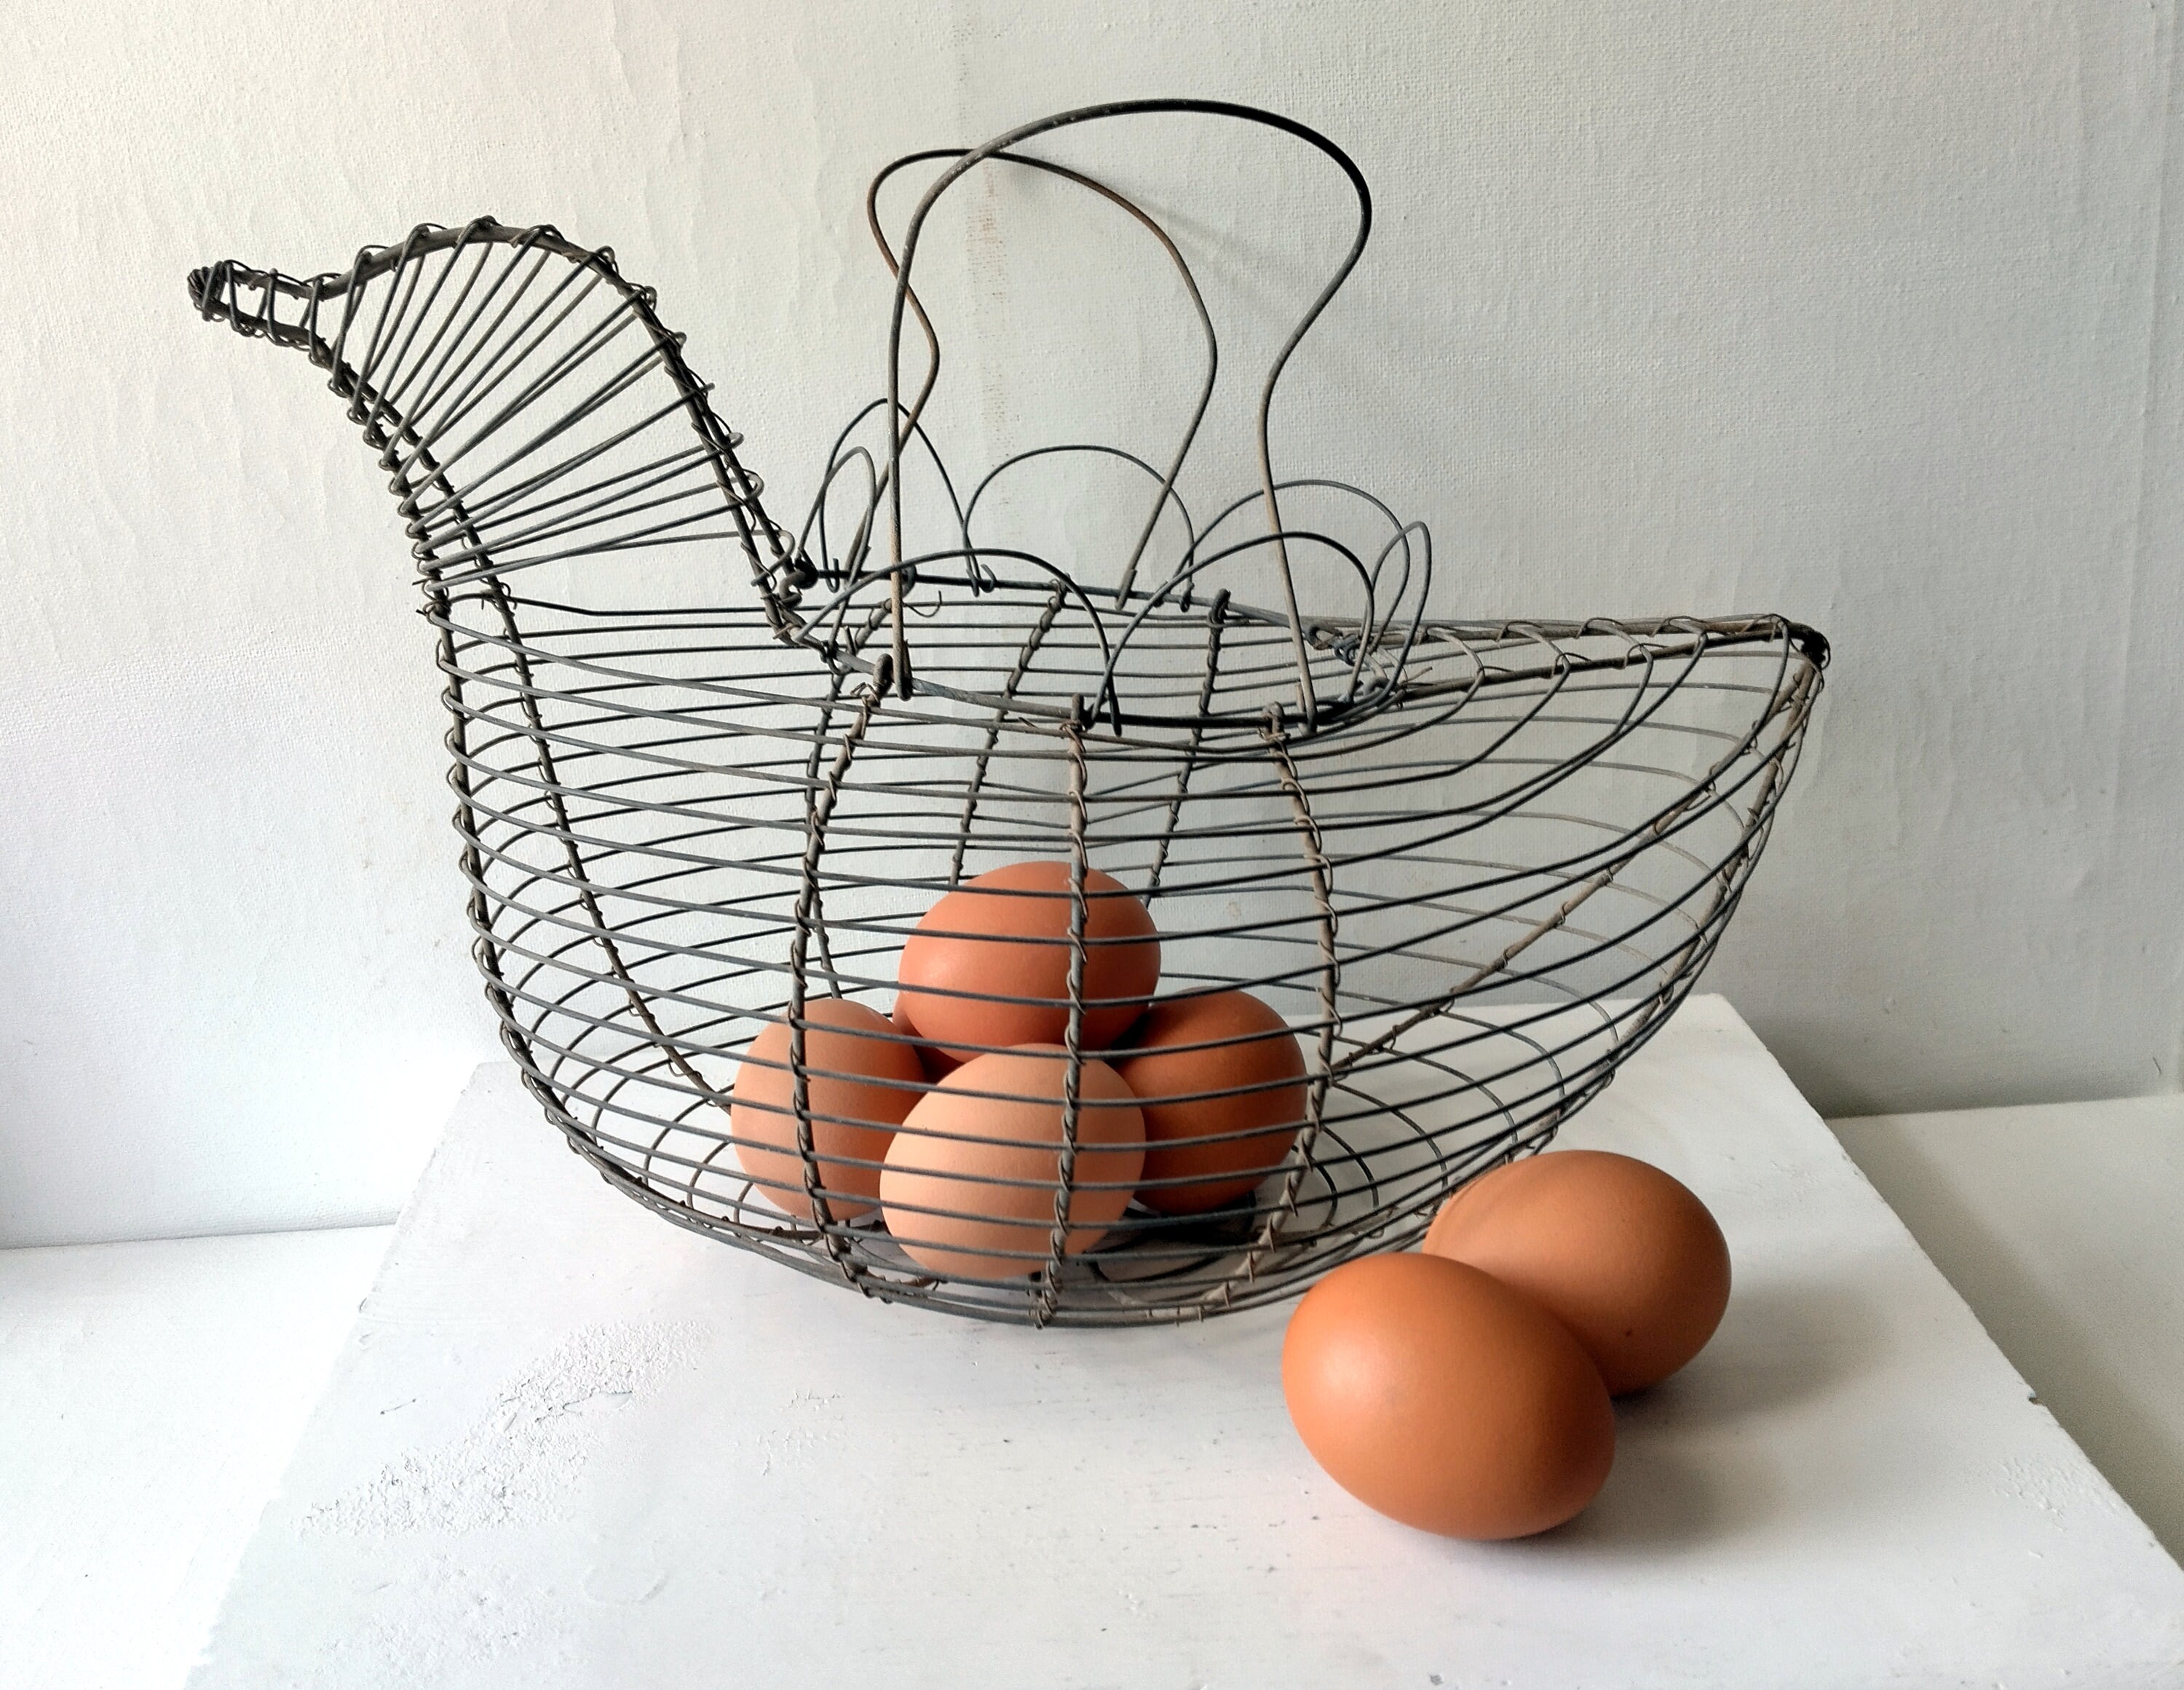 Vintage Metal Wire Farmhouse Chicken Egg Basket W/ Handles + Wooden Eggs